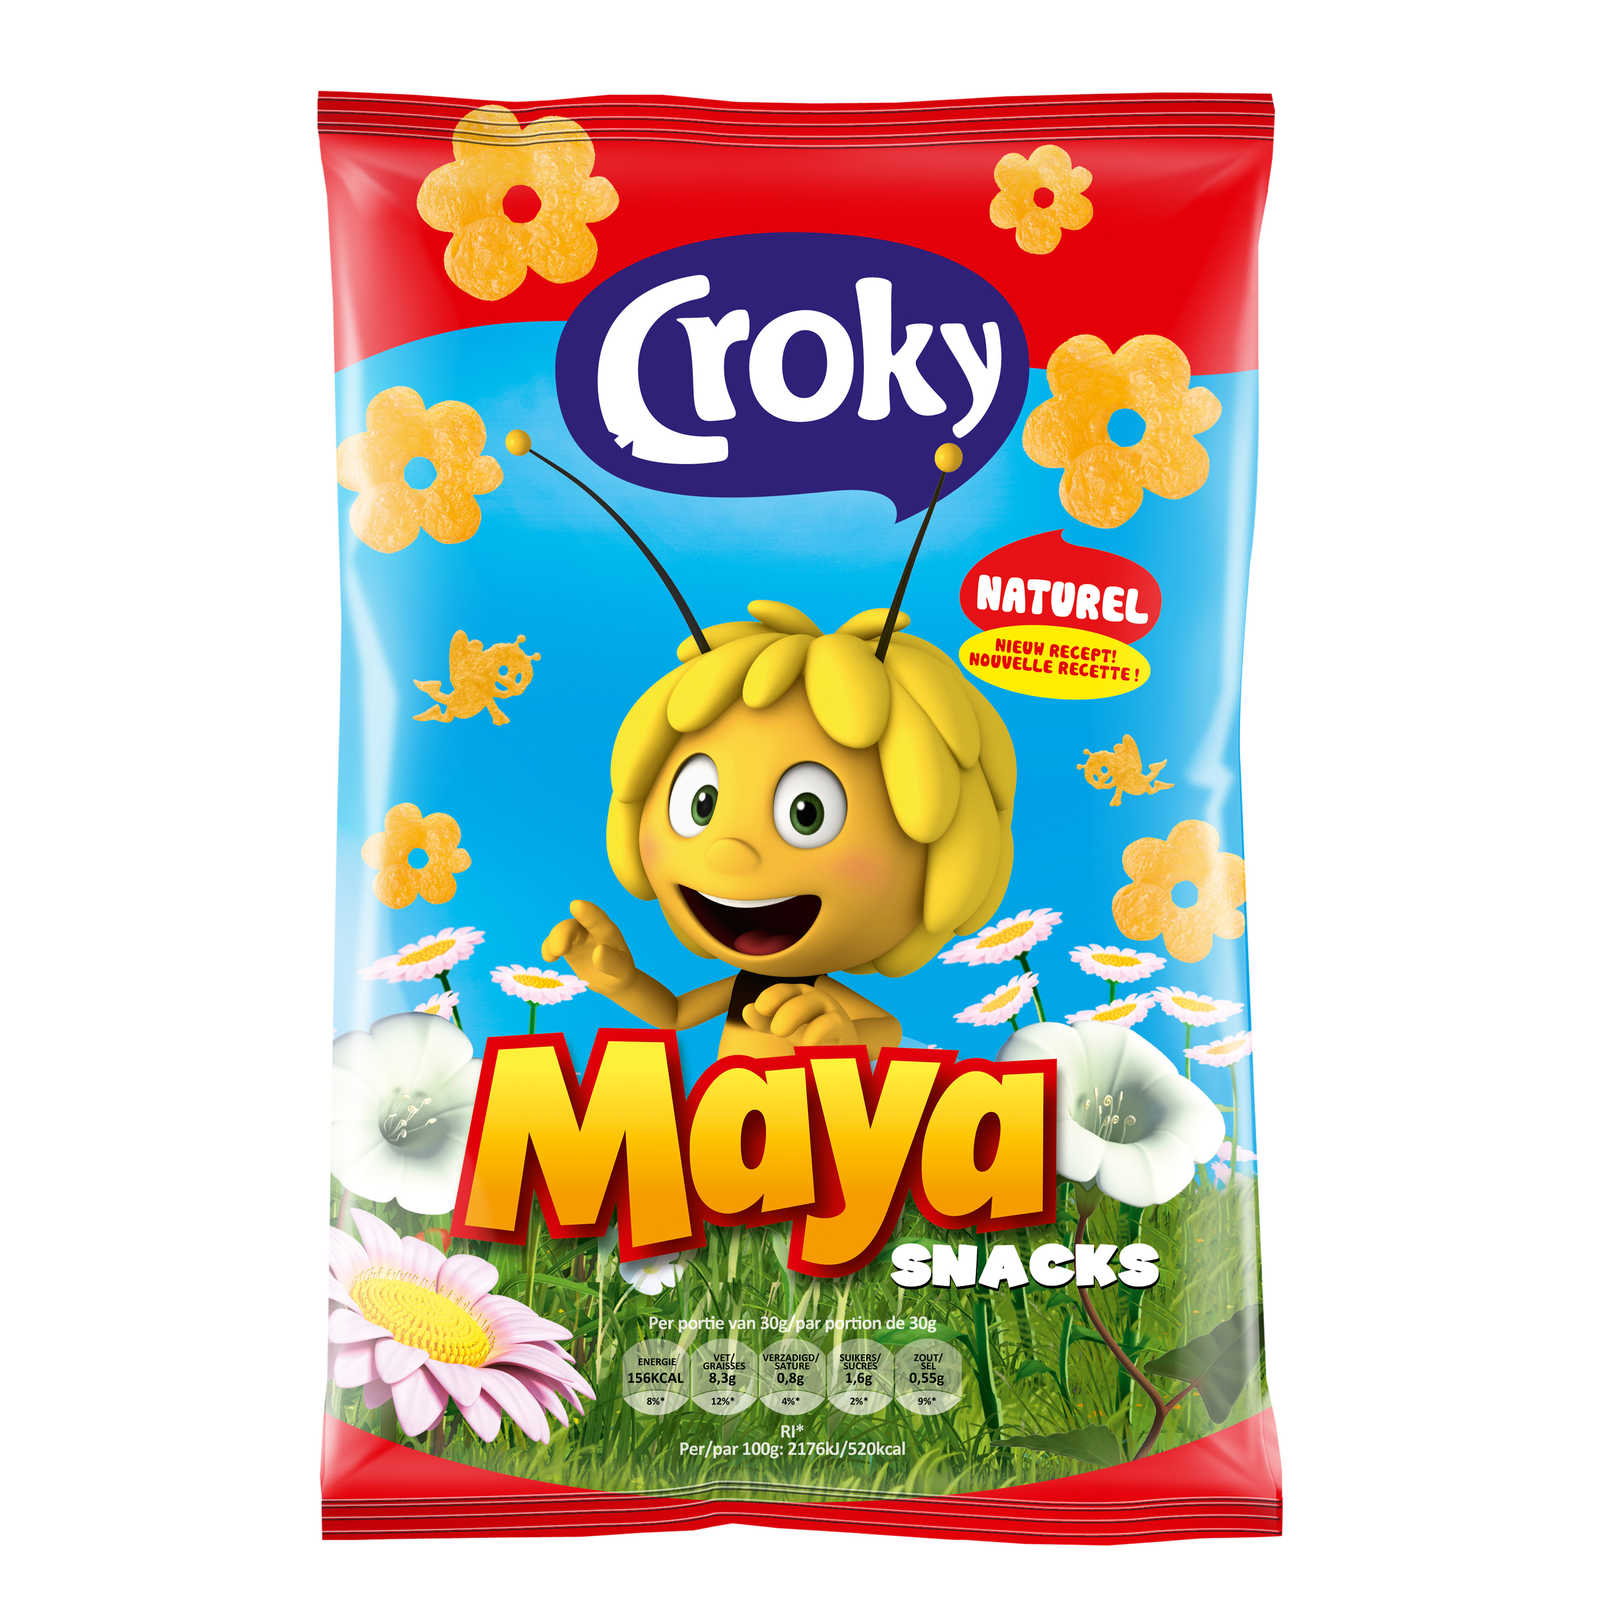 Croky-Maya